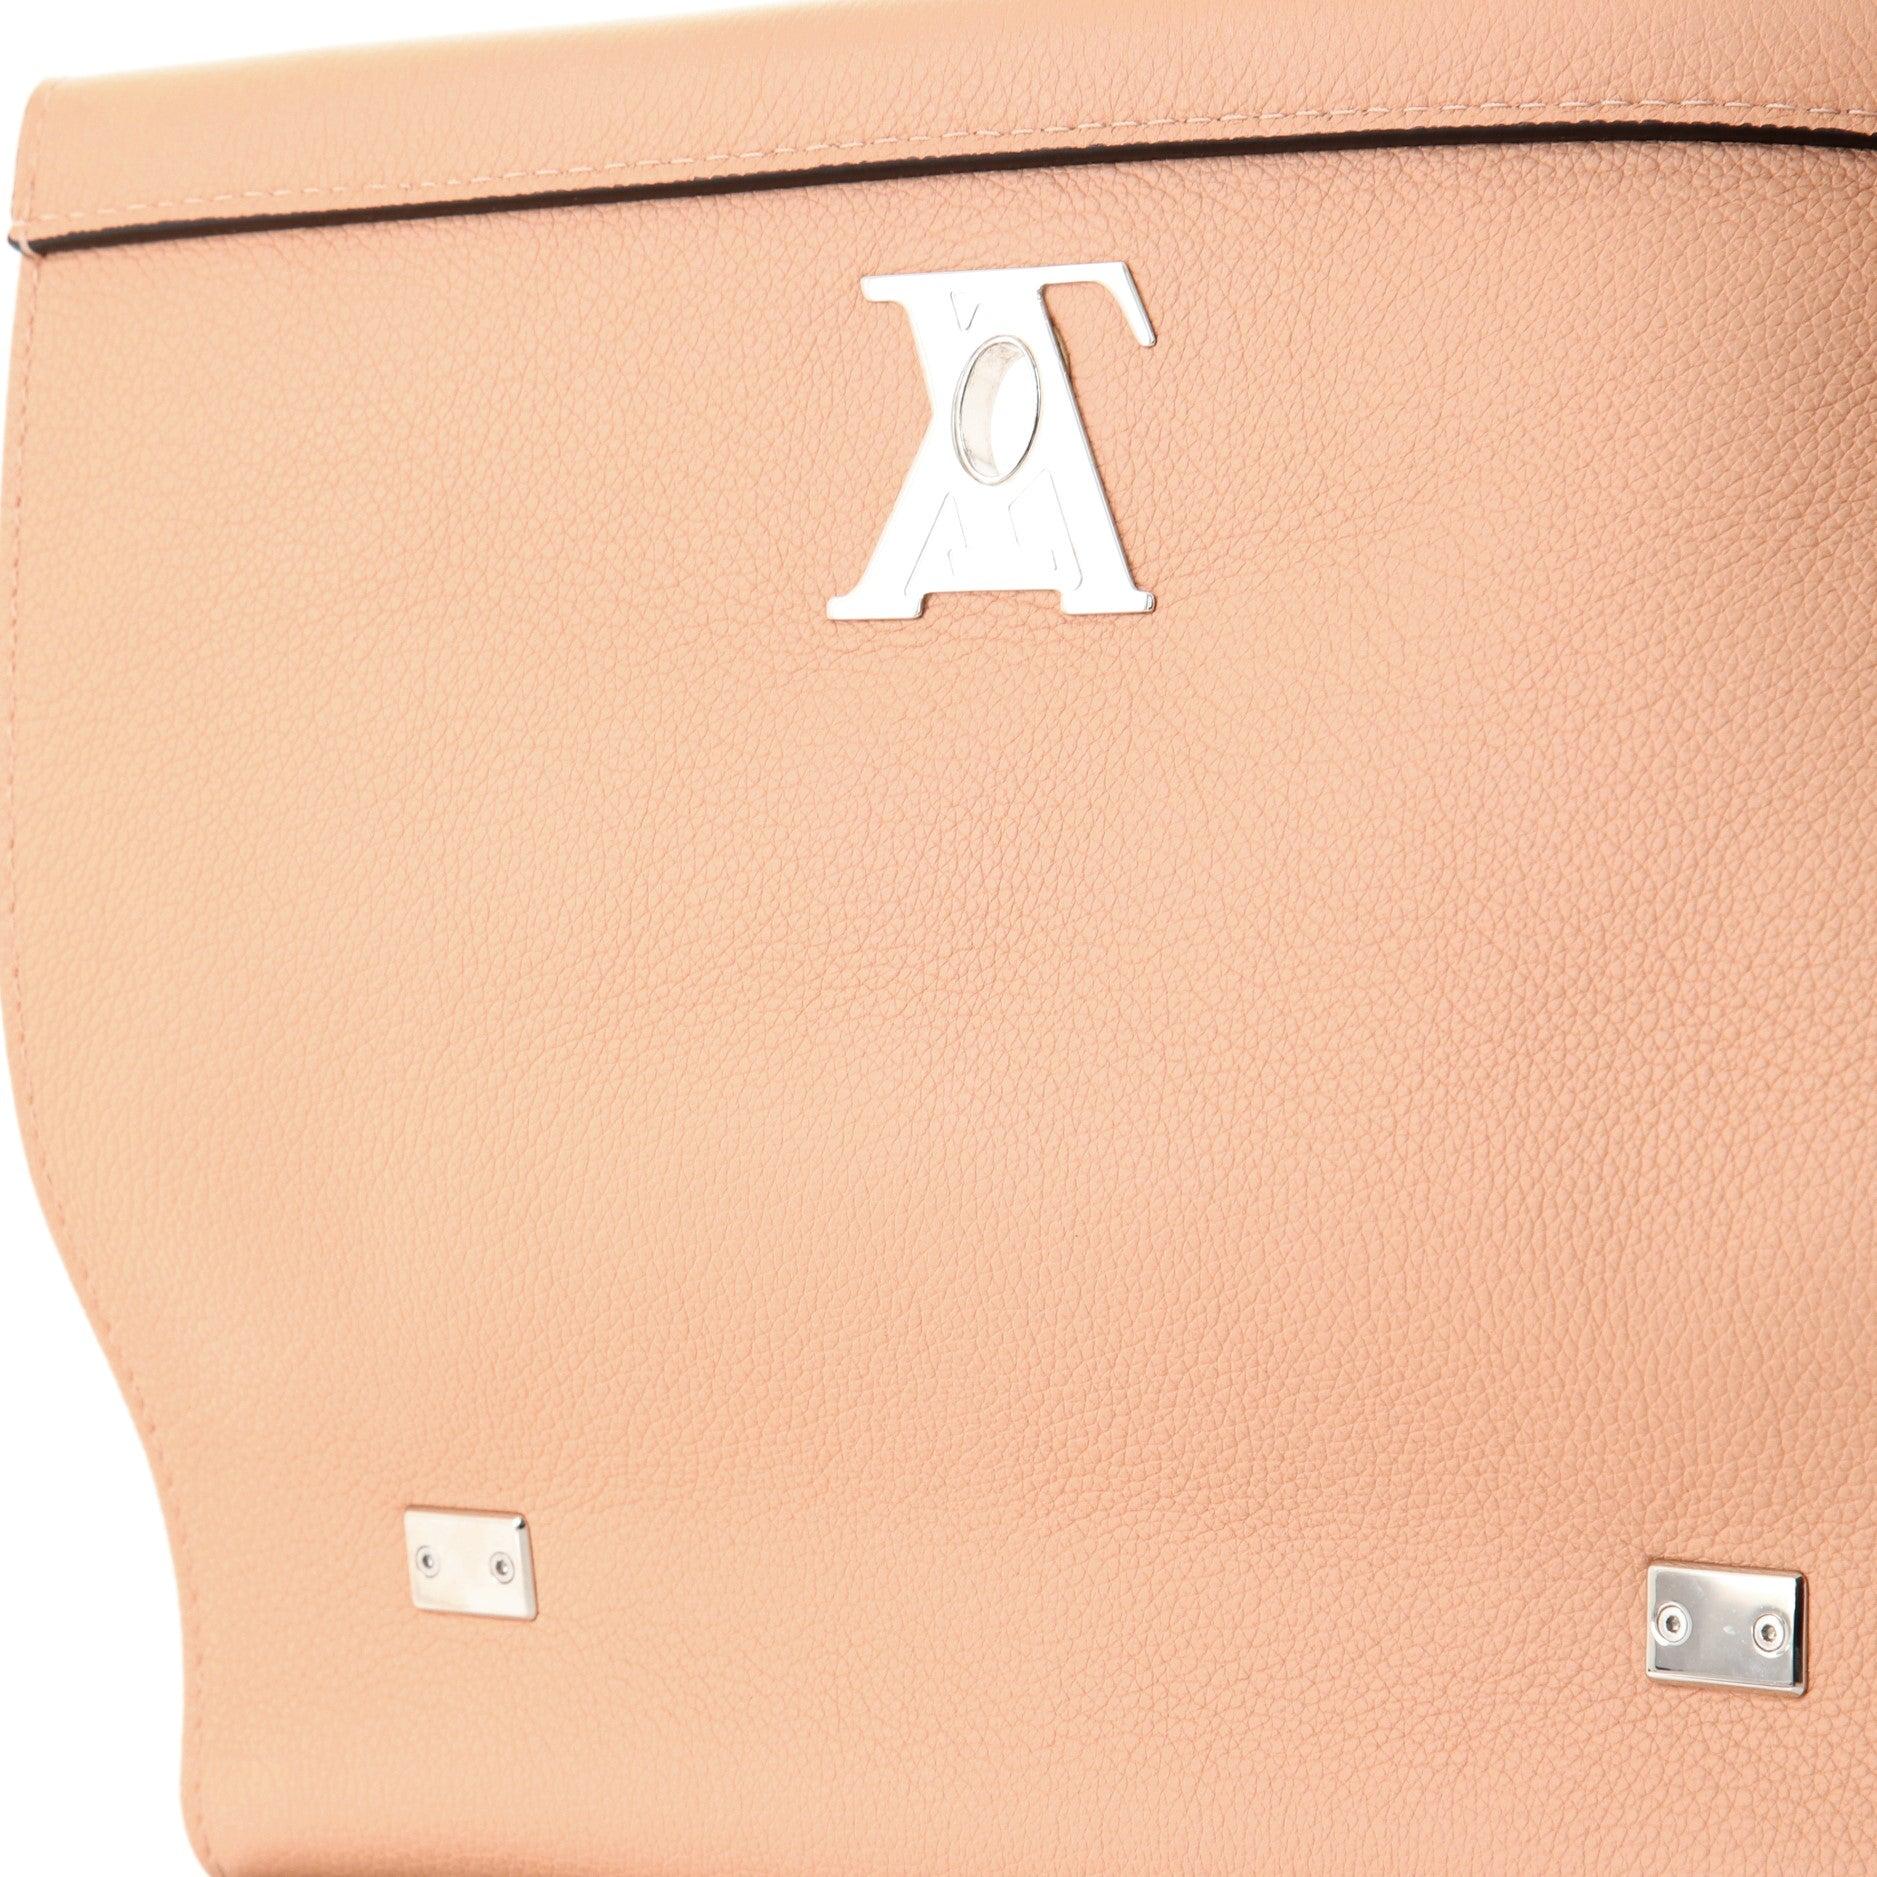 Louis Vuitton Lockme II Handbag Leather 2